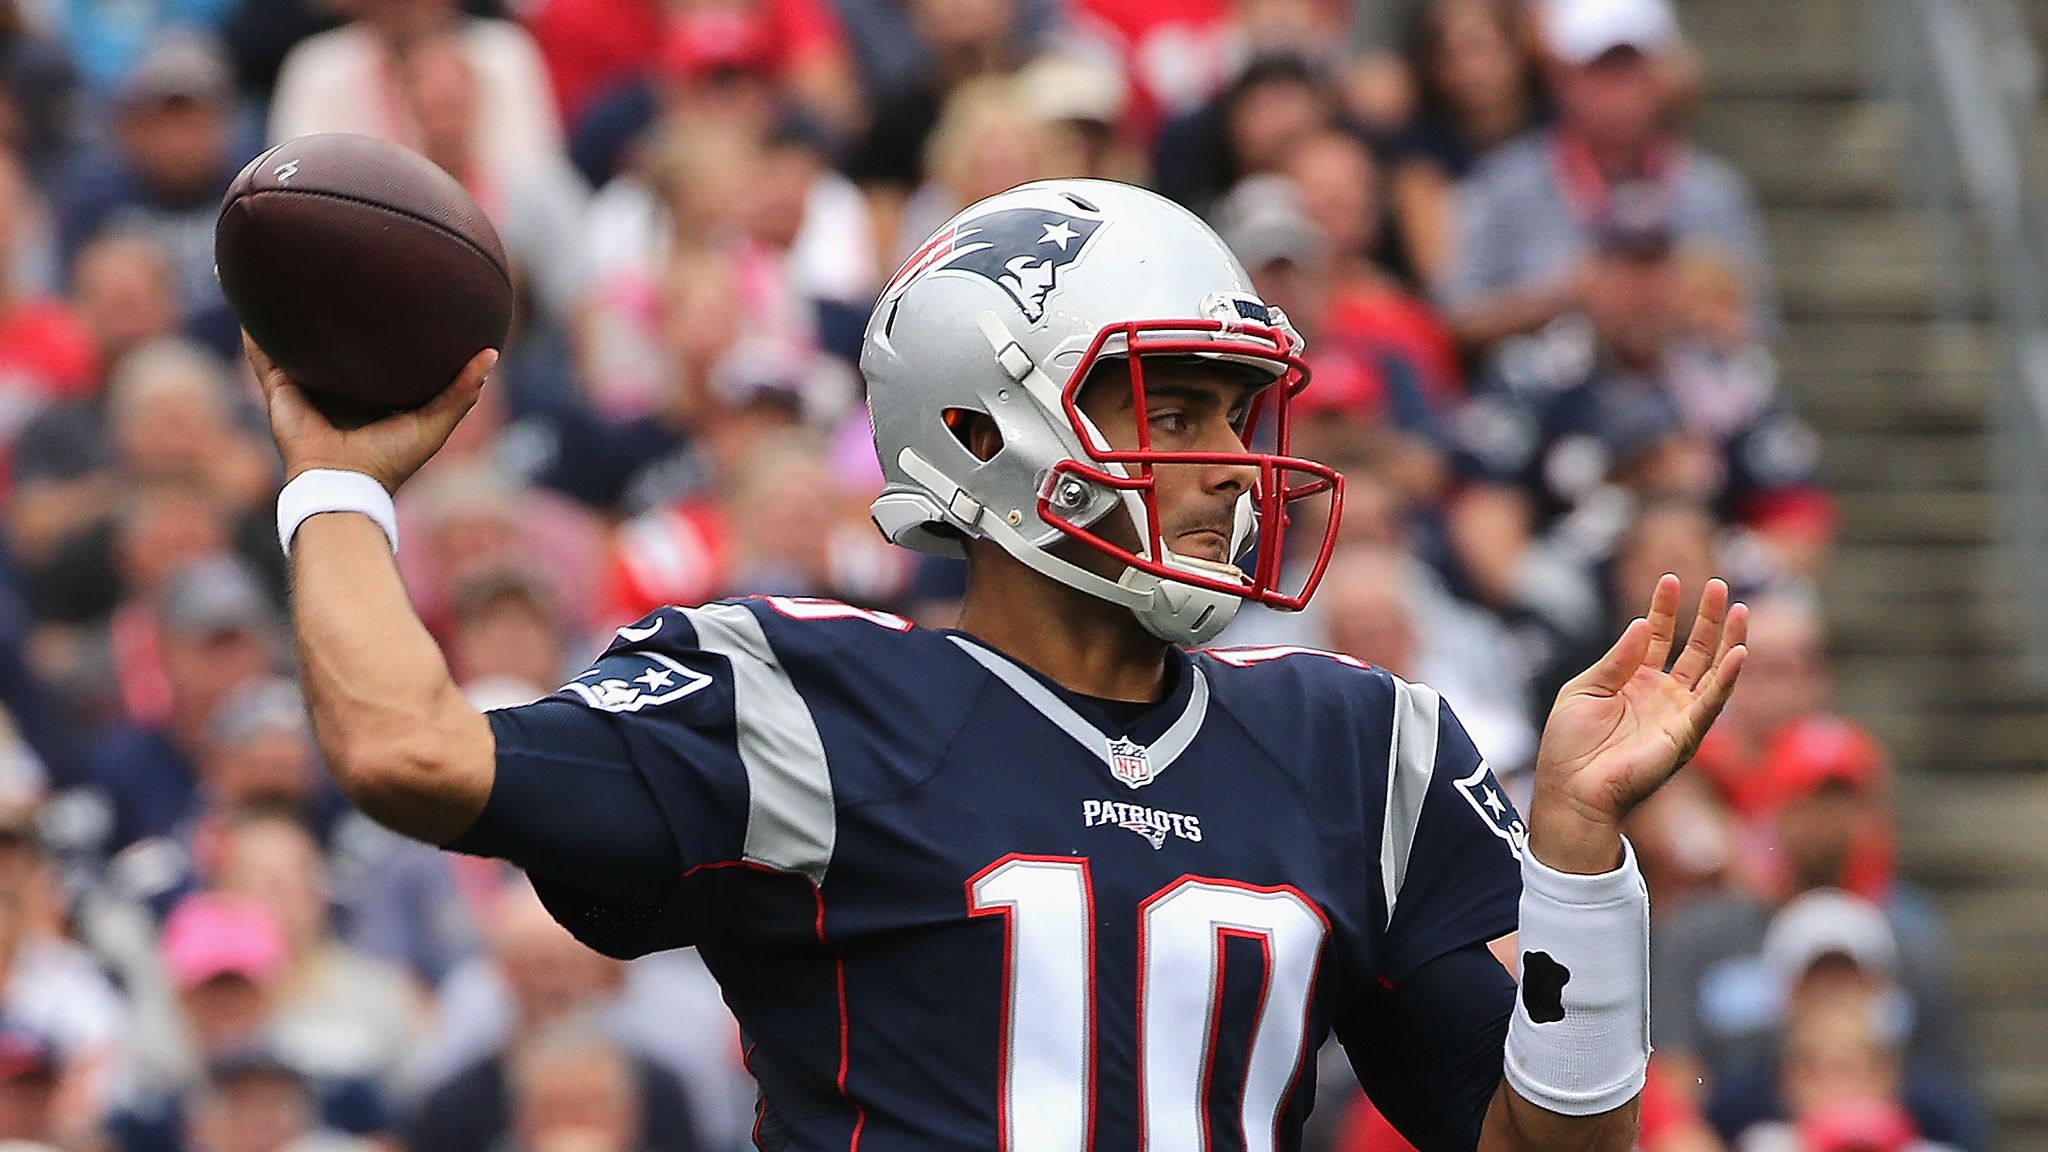 Tom Brady's back-up quarterback Jimmy Garoppolo traded by Patriots to 49ers, NFL News